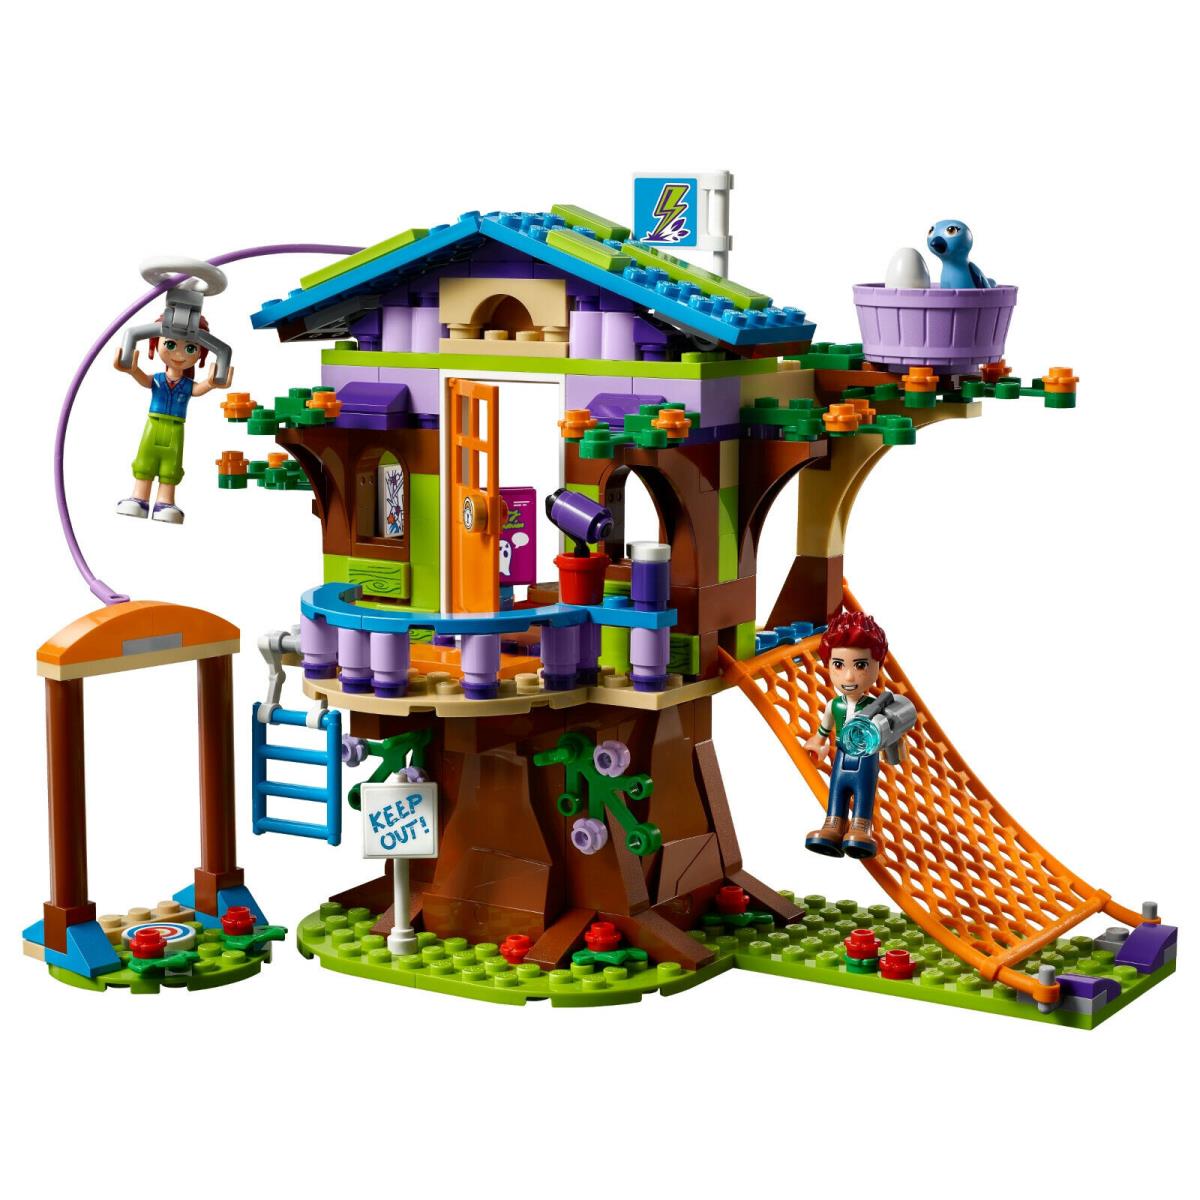 Lego 41335 Friends Mia s Tree House Set - 2018 Retired